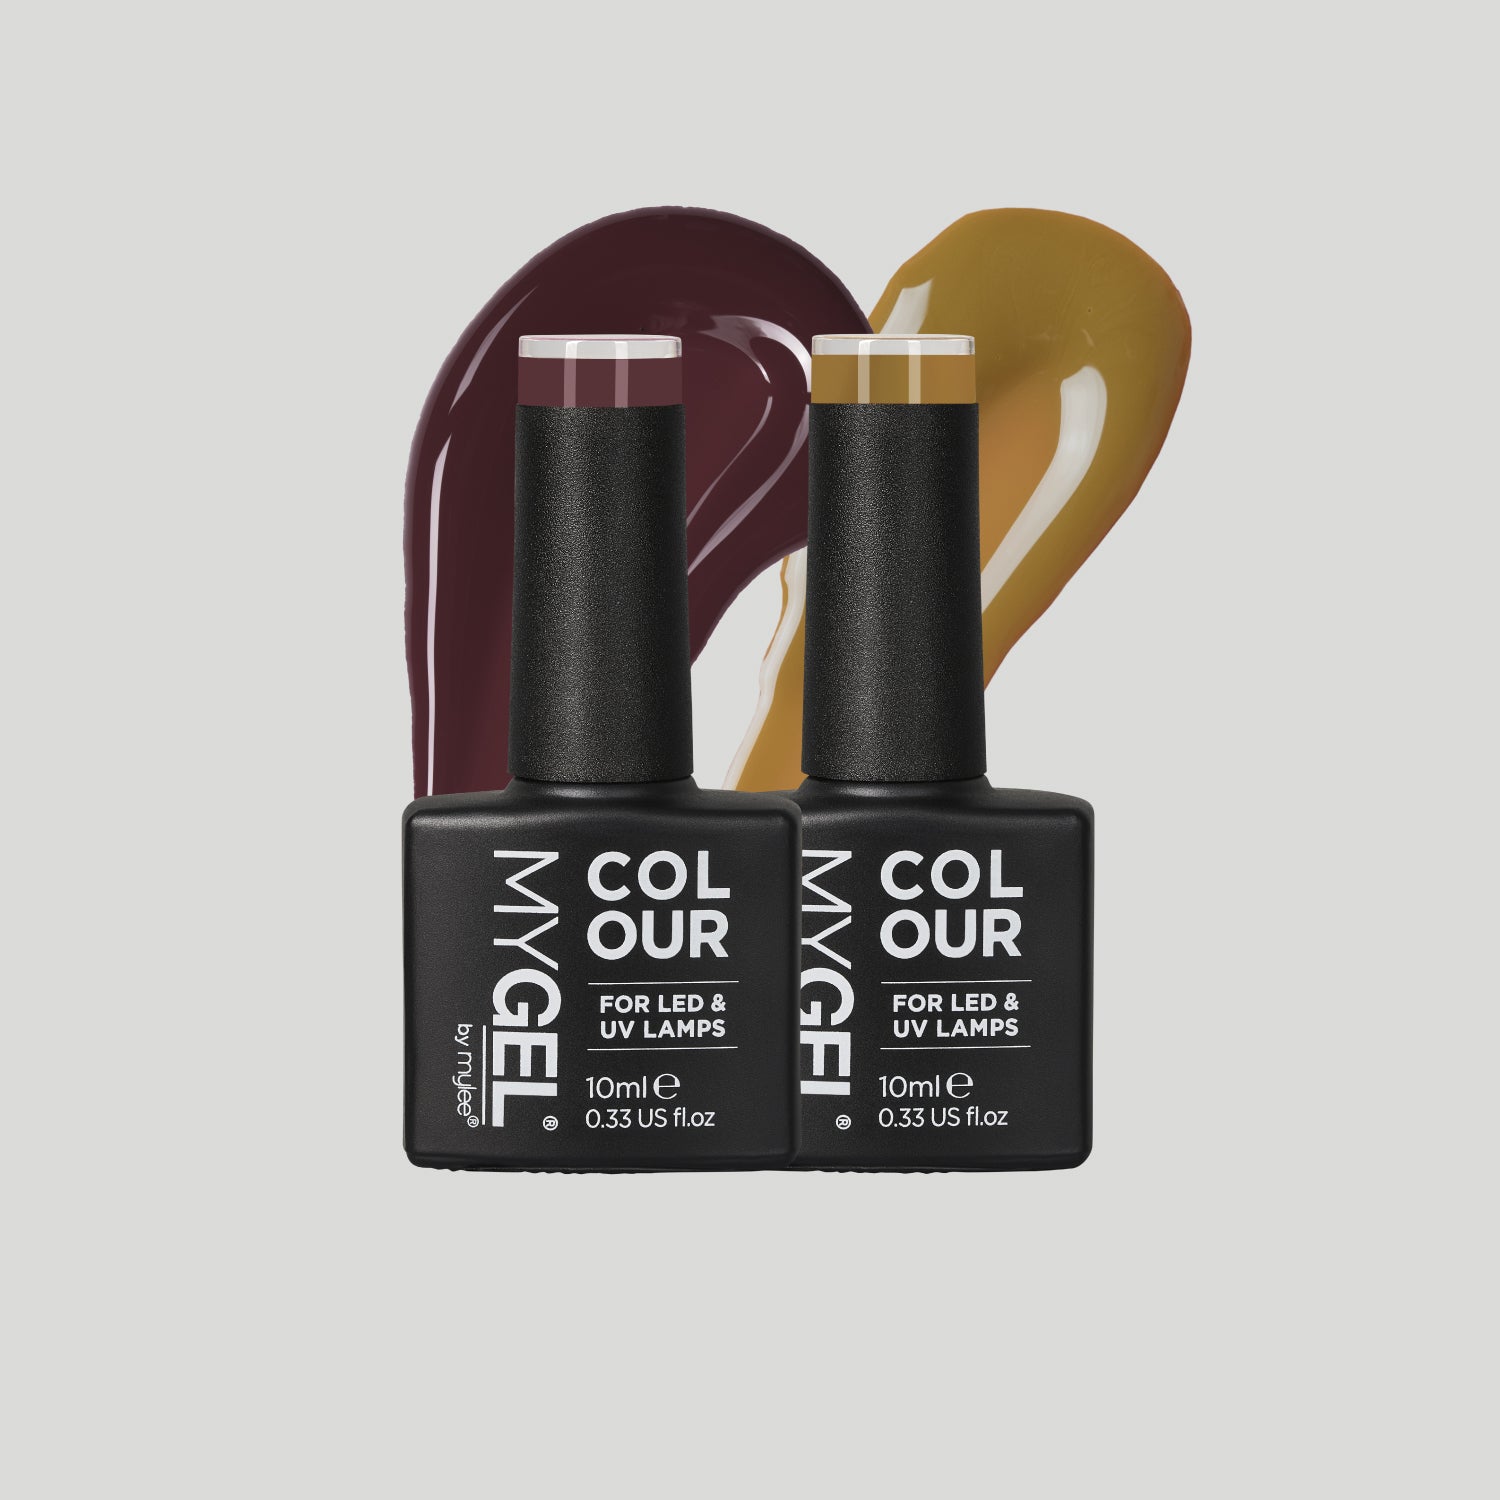 Mylee Winter Warmer LED/UV Gel Nail Polish Duo - 2x10ml – Long Lasting At Home Manicure/Pedicure, High Gloss And Chip Free Wear Nail Varnish